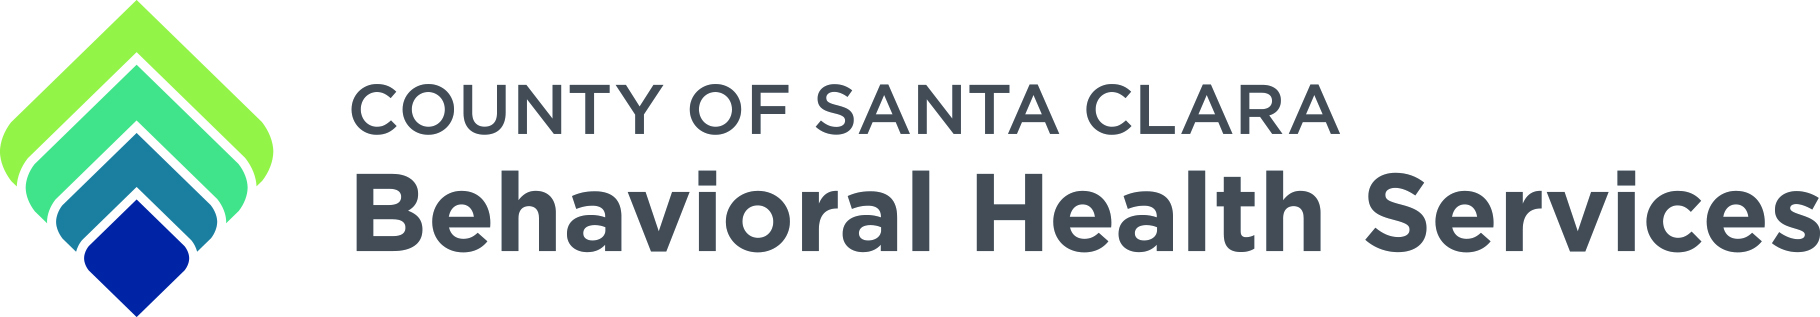 County of Santa Clara Behavioral Health Services Logo